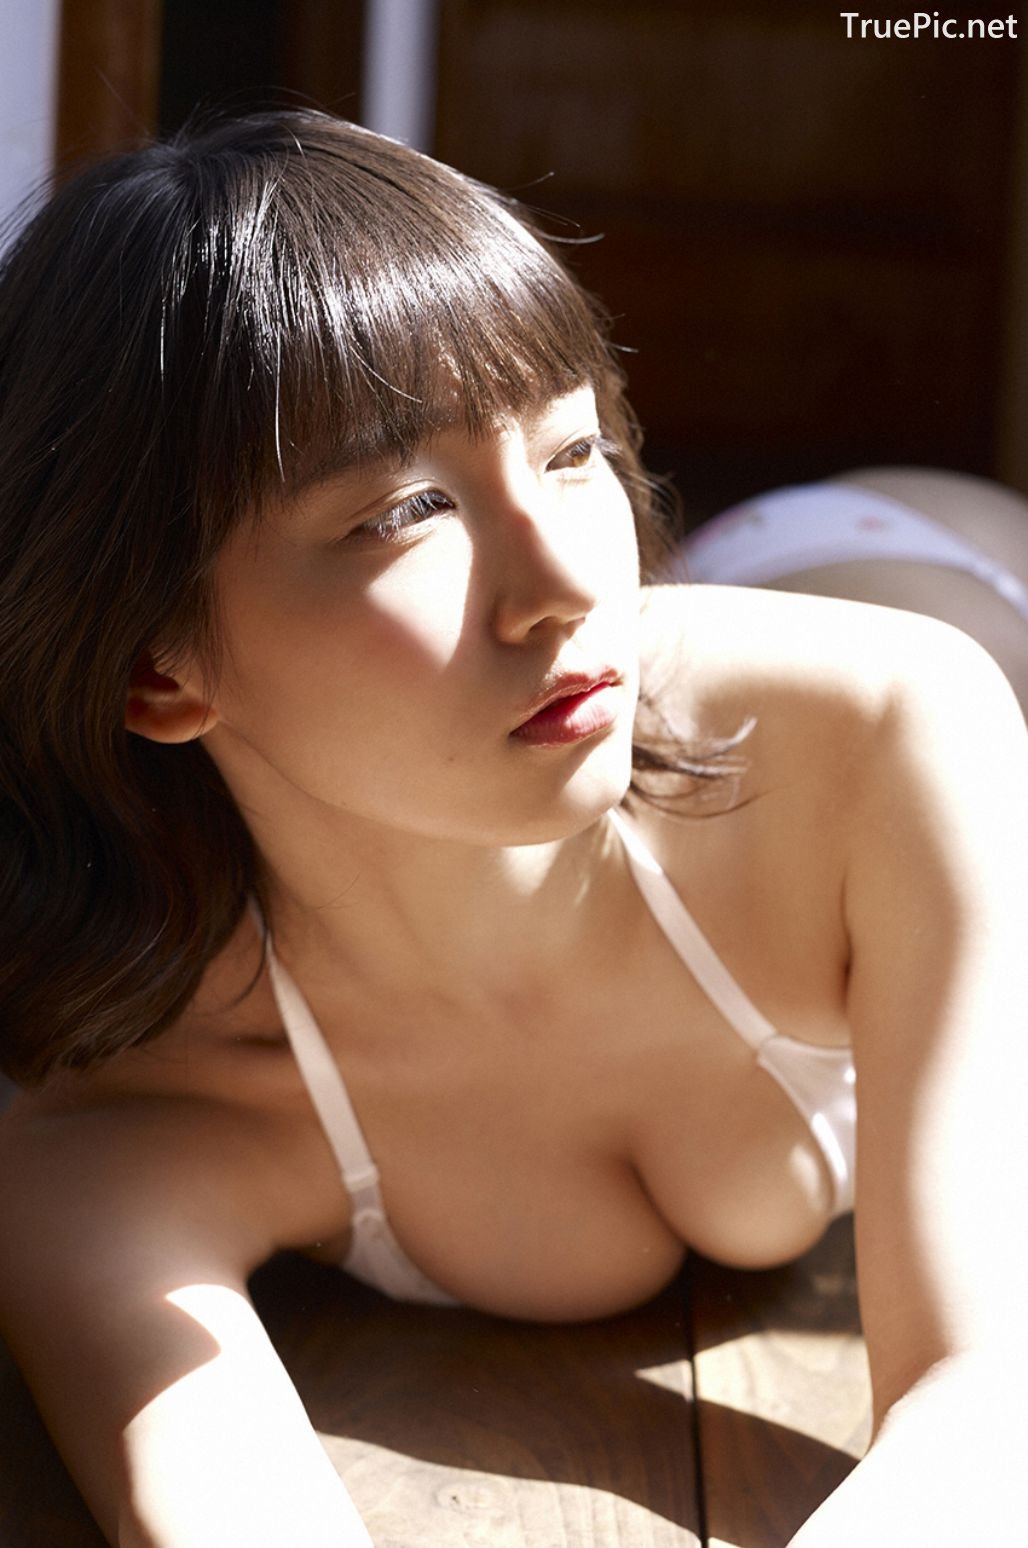 Image-Japanese-Actress-And-Model-Riho-Yoshioka-Pure-Beauty-Of-Sea-Goddess-TruePic.net- Picture-115